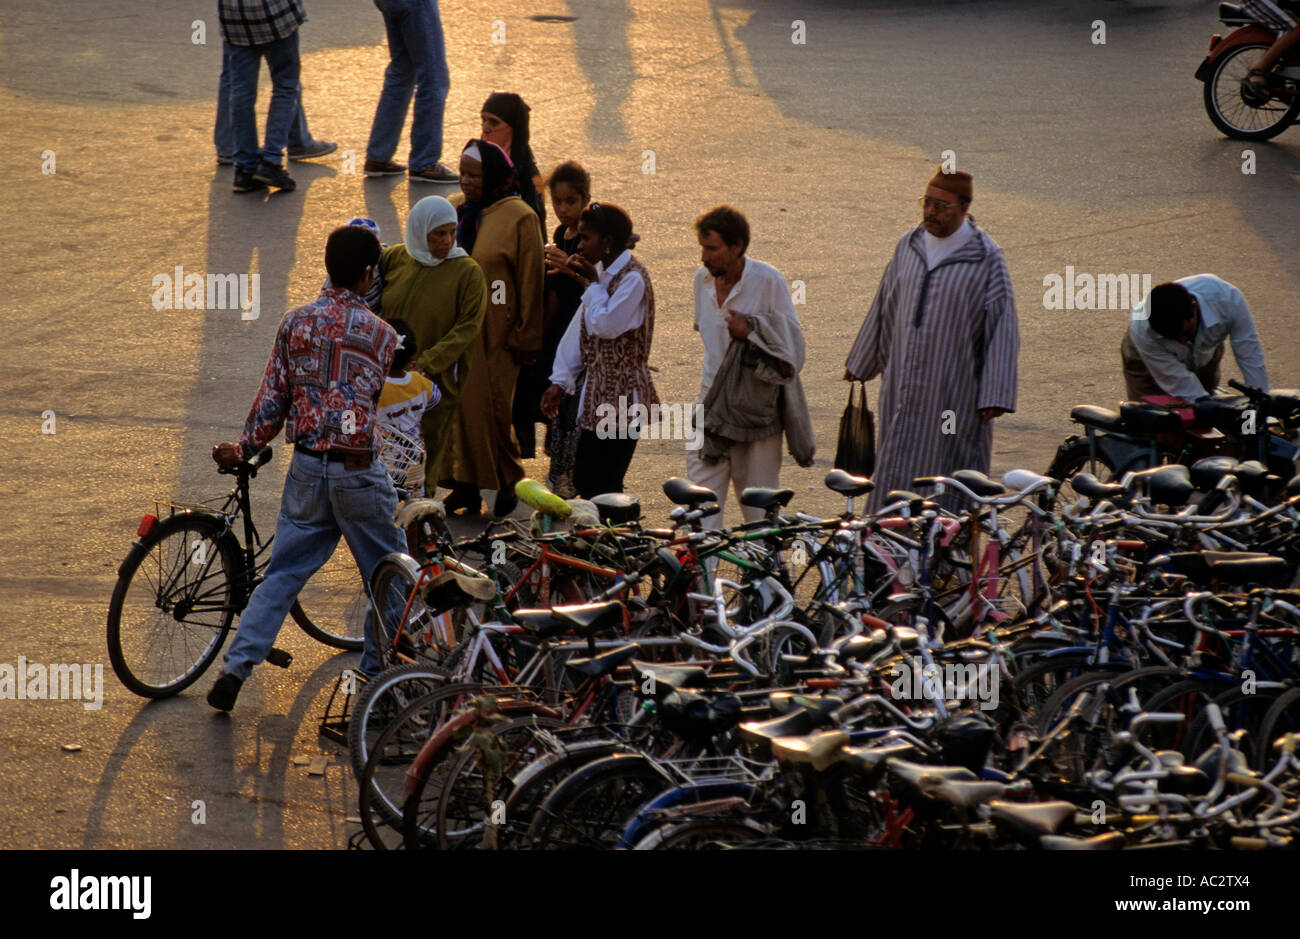 Morocco marrakech djemaa el fna plaza people walking near parked bikes Stock Photo